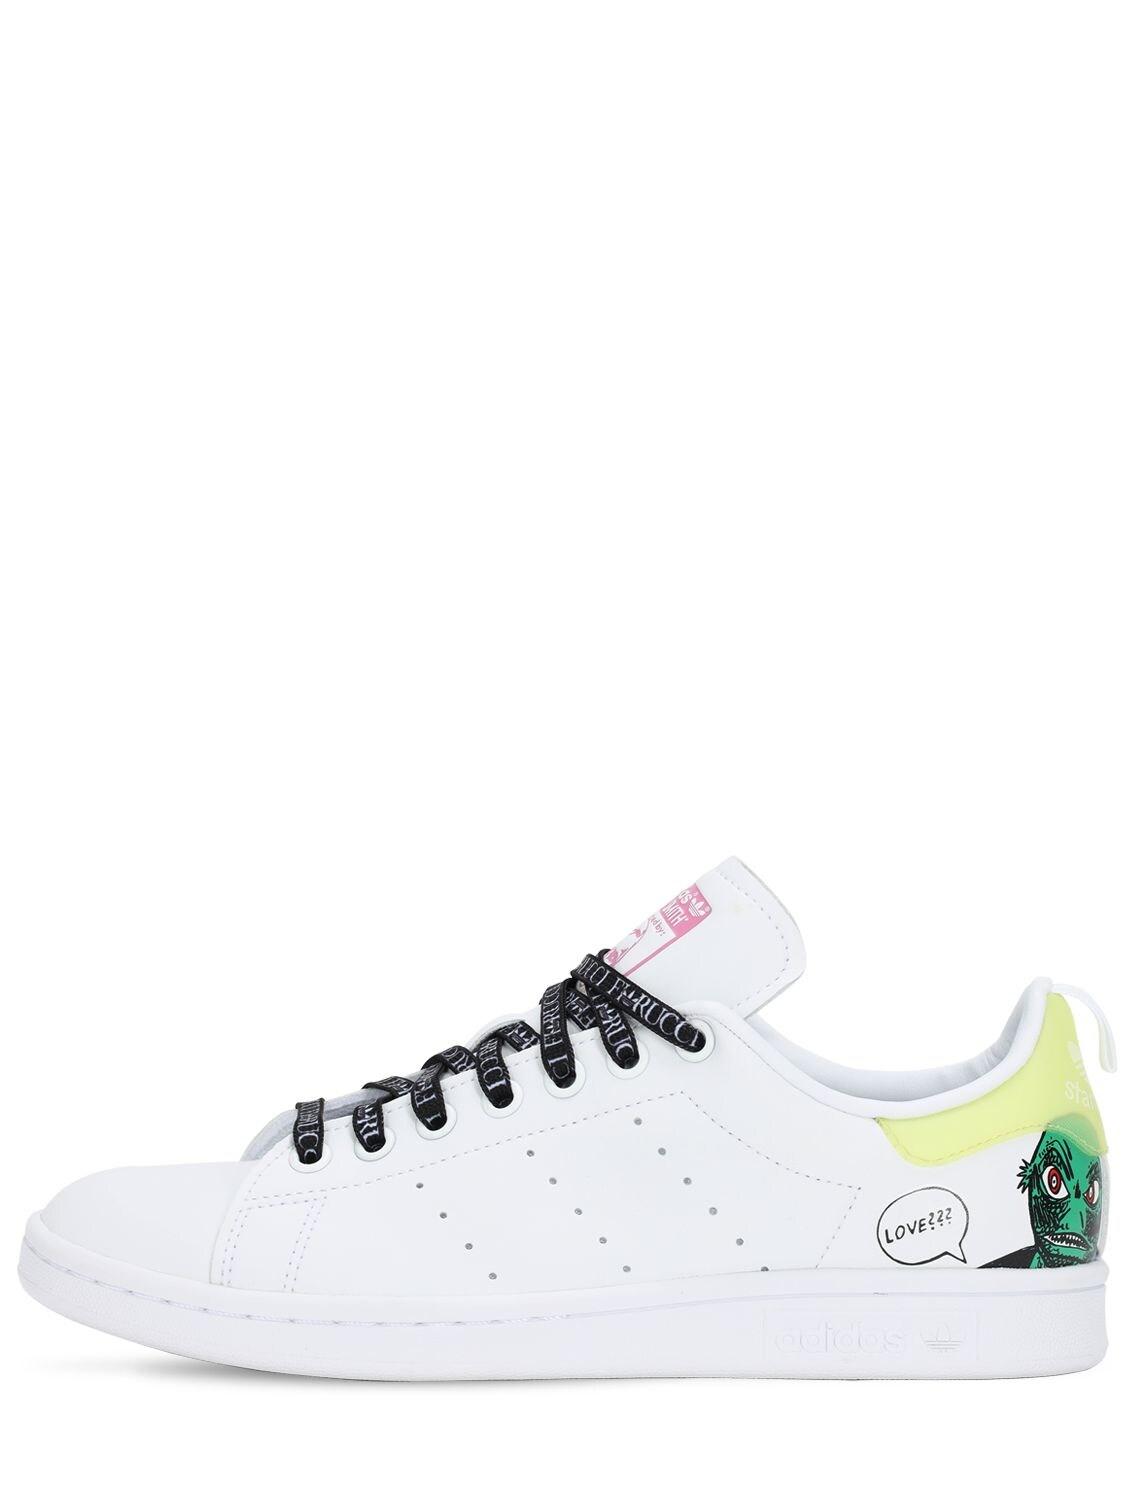 adidas Originals Fiorucci Stan Smith Printed Sneakers in White | Lyst